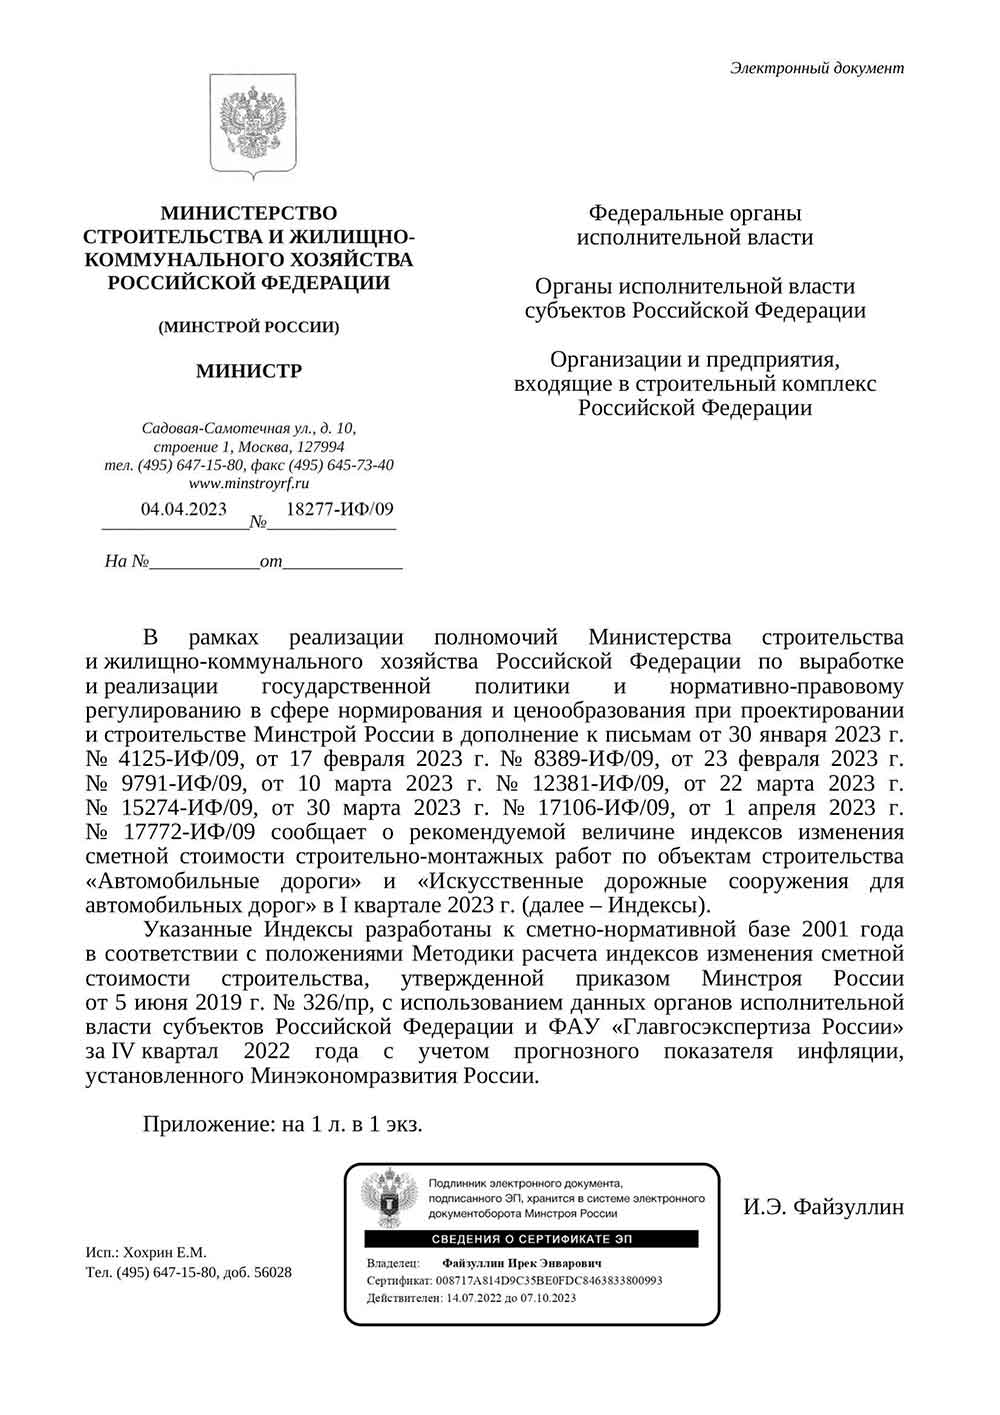 Письмо Минстроя РФ №18277-ИФ/09 от 04.04.2023 г.